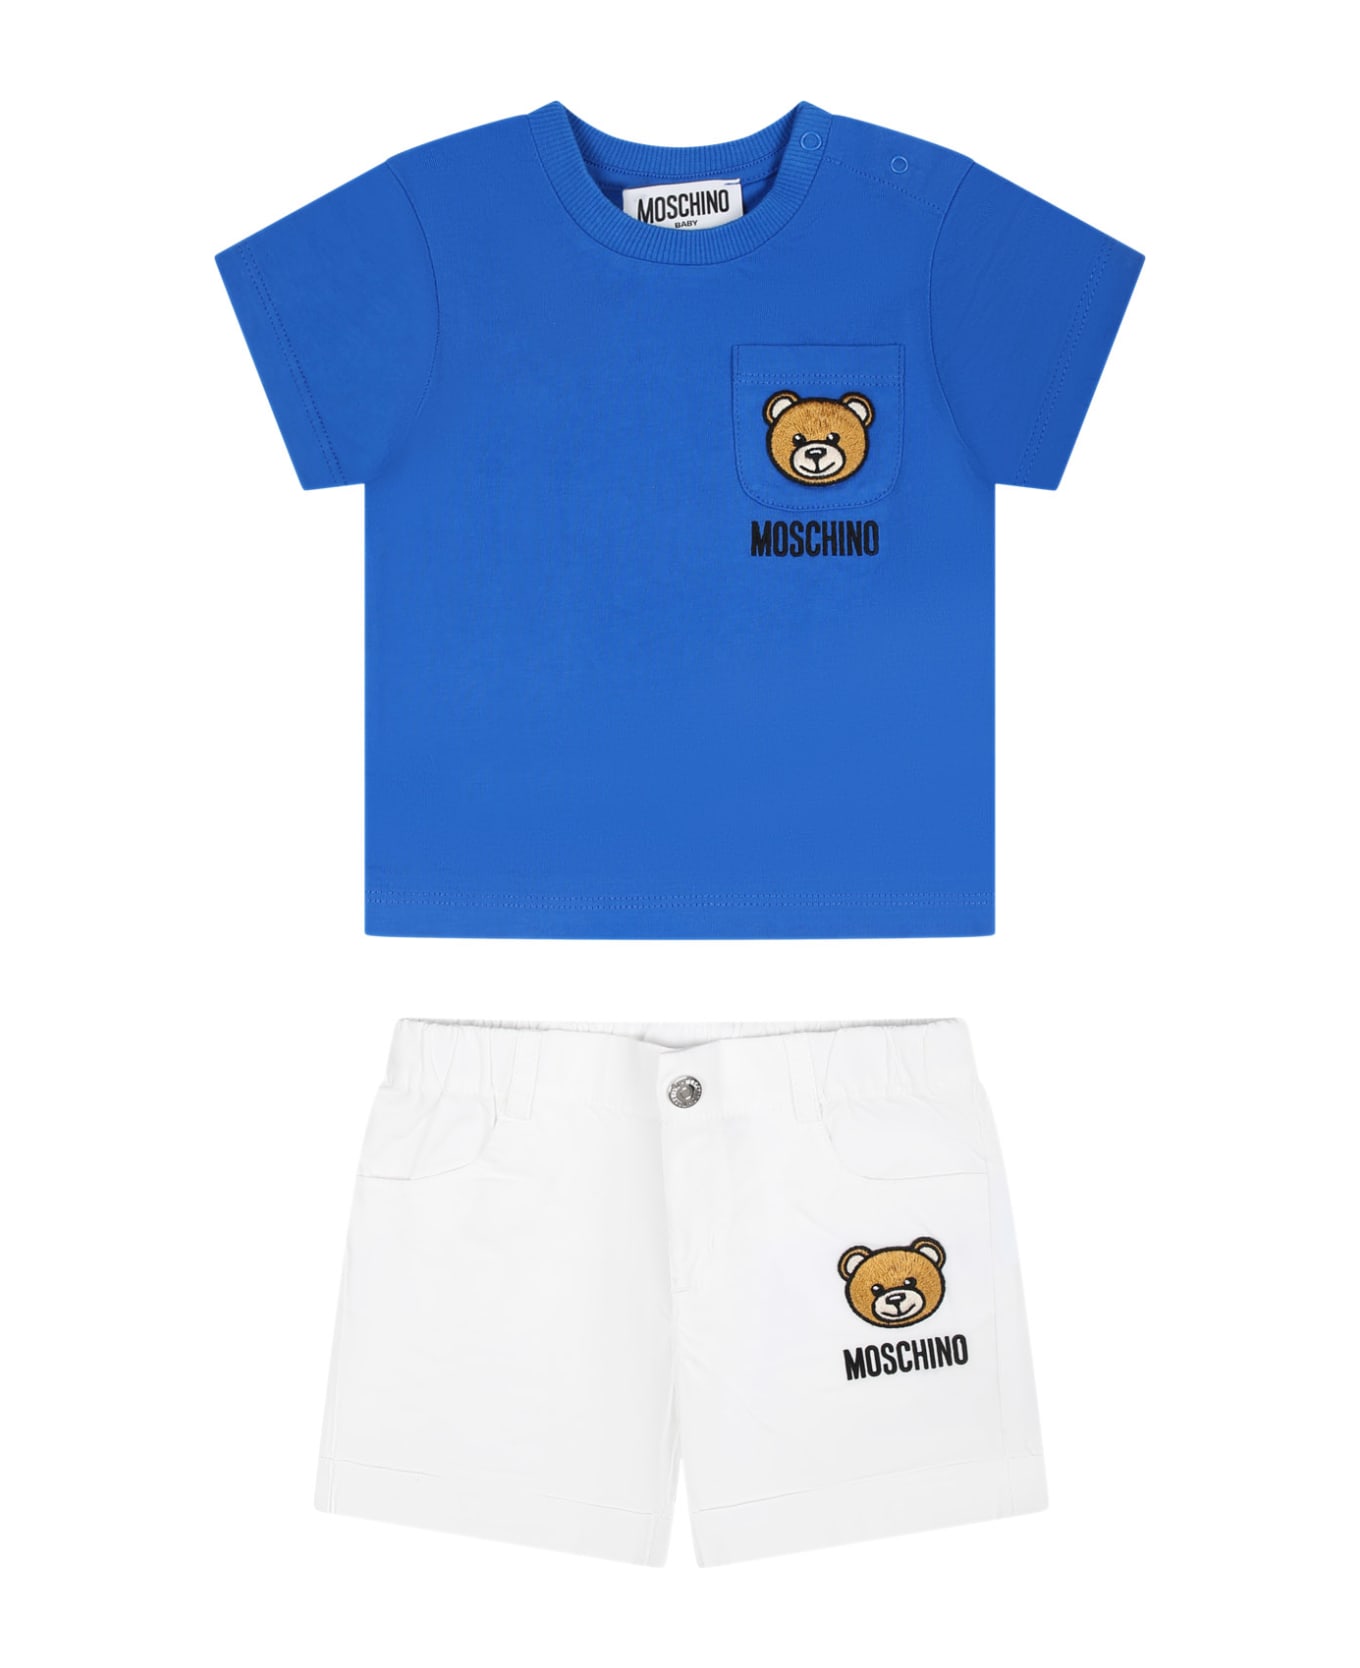 Moschino Multicolor Sports Suit For Baby Boy - Multicolor